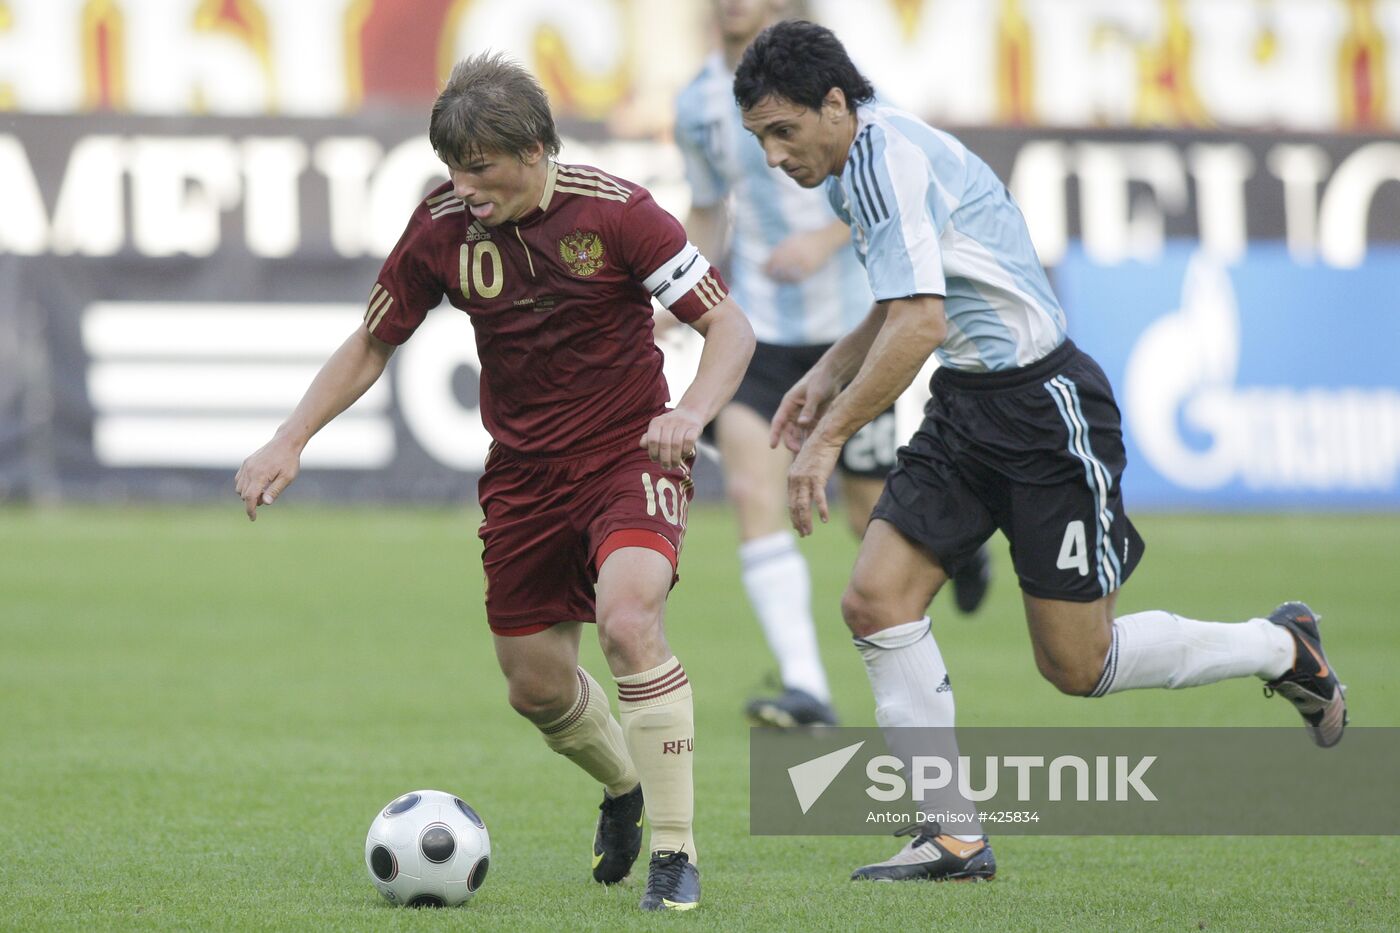 Russia vs. Argentina international friendly